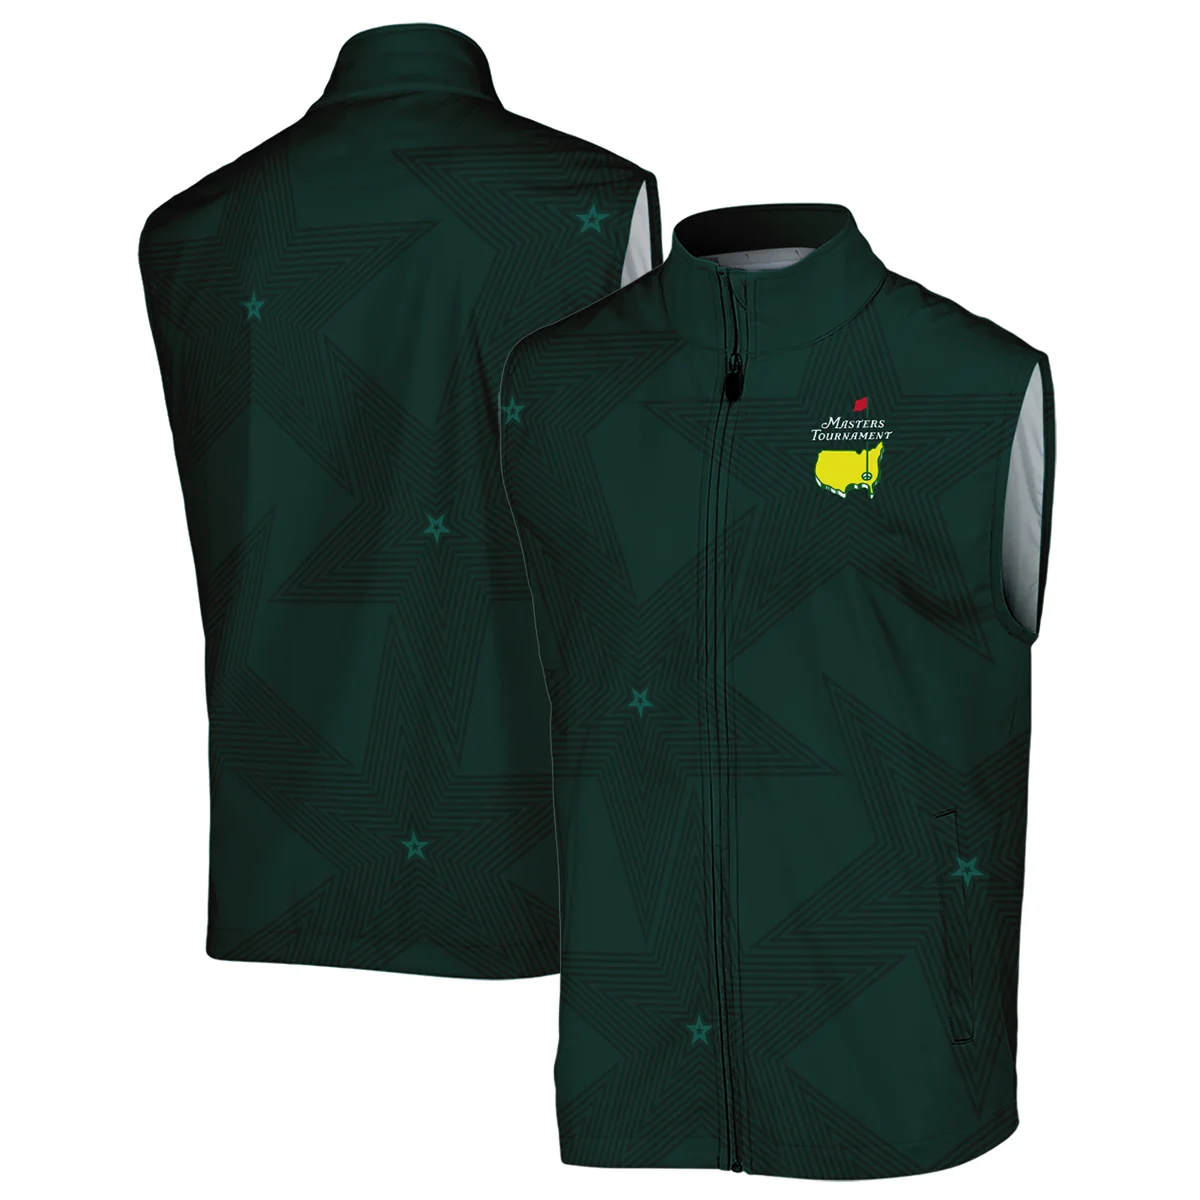 Stars Dark Green Golf Masters Tournament Polo Shirt Style Classic Polo Shirt For Men